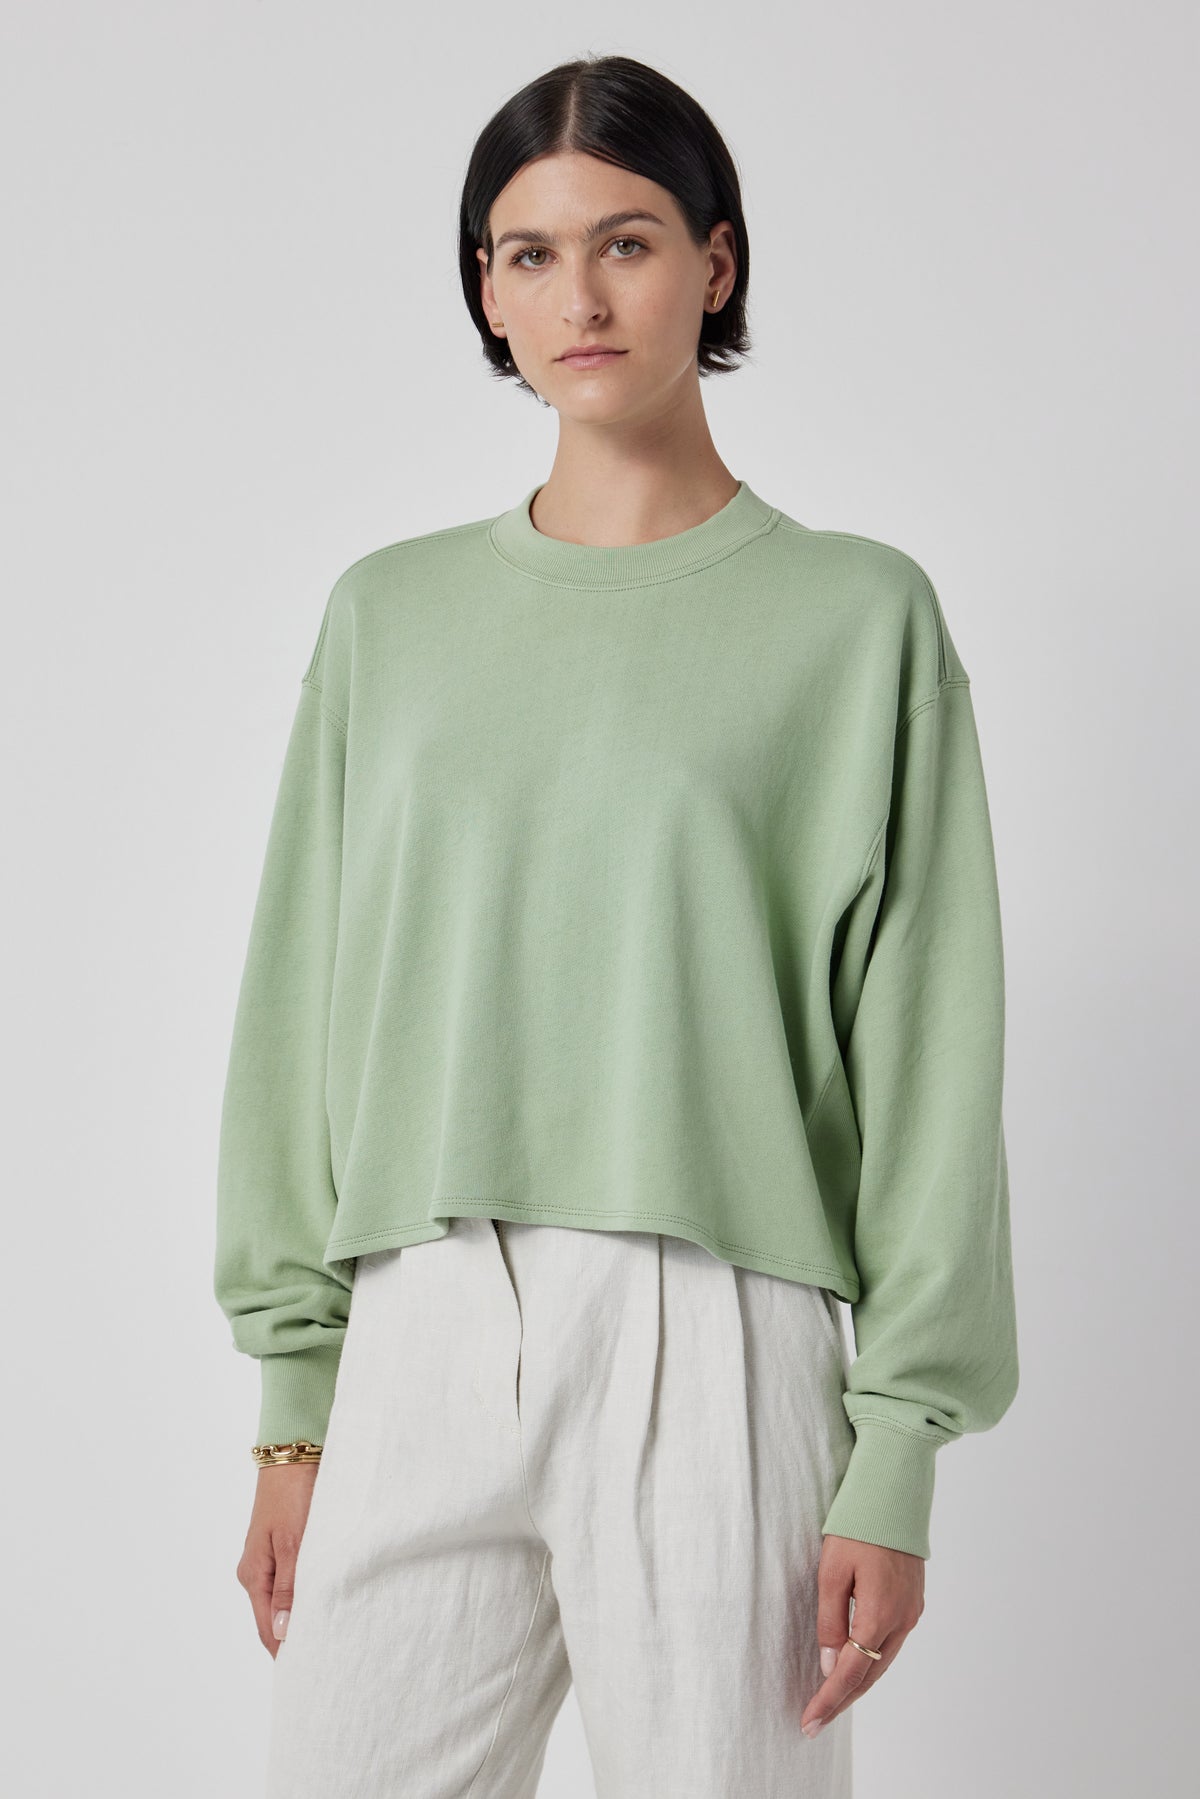 A model wearing a green Velvet by Jenny Graham MALIBU SWEATSHIRT and white pants.-36168705343681